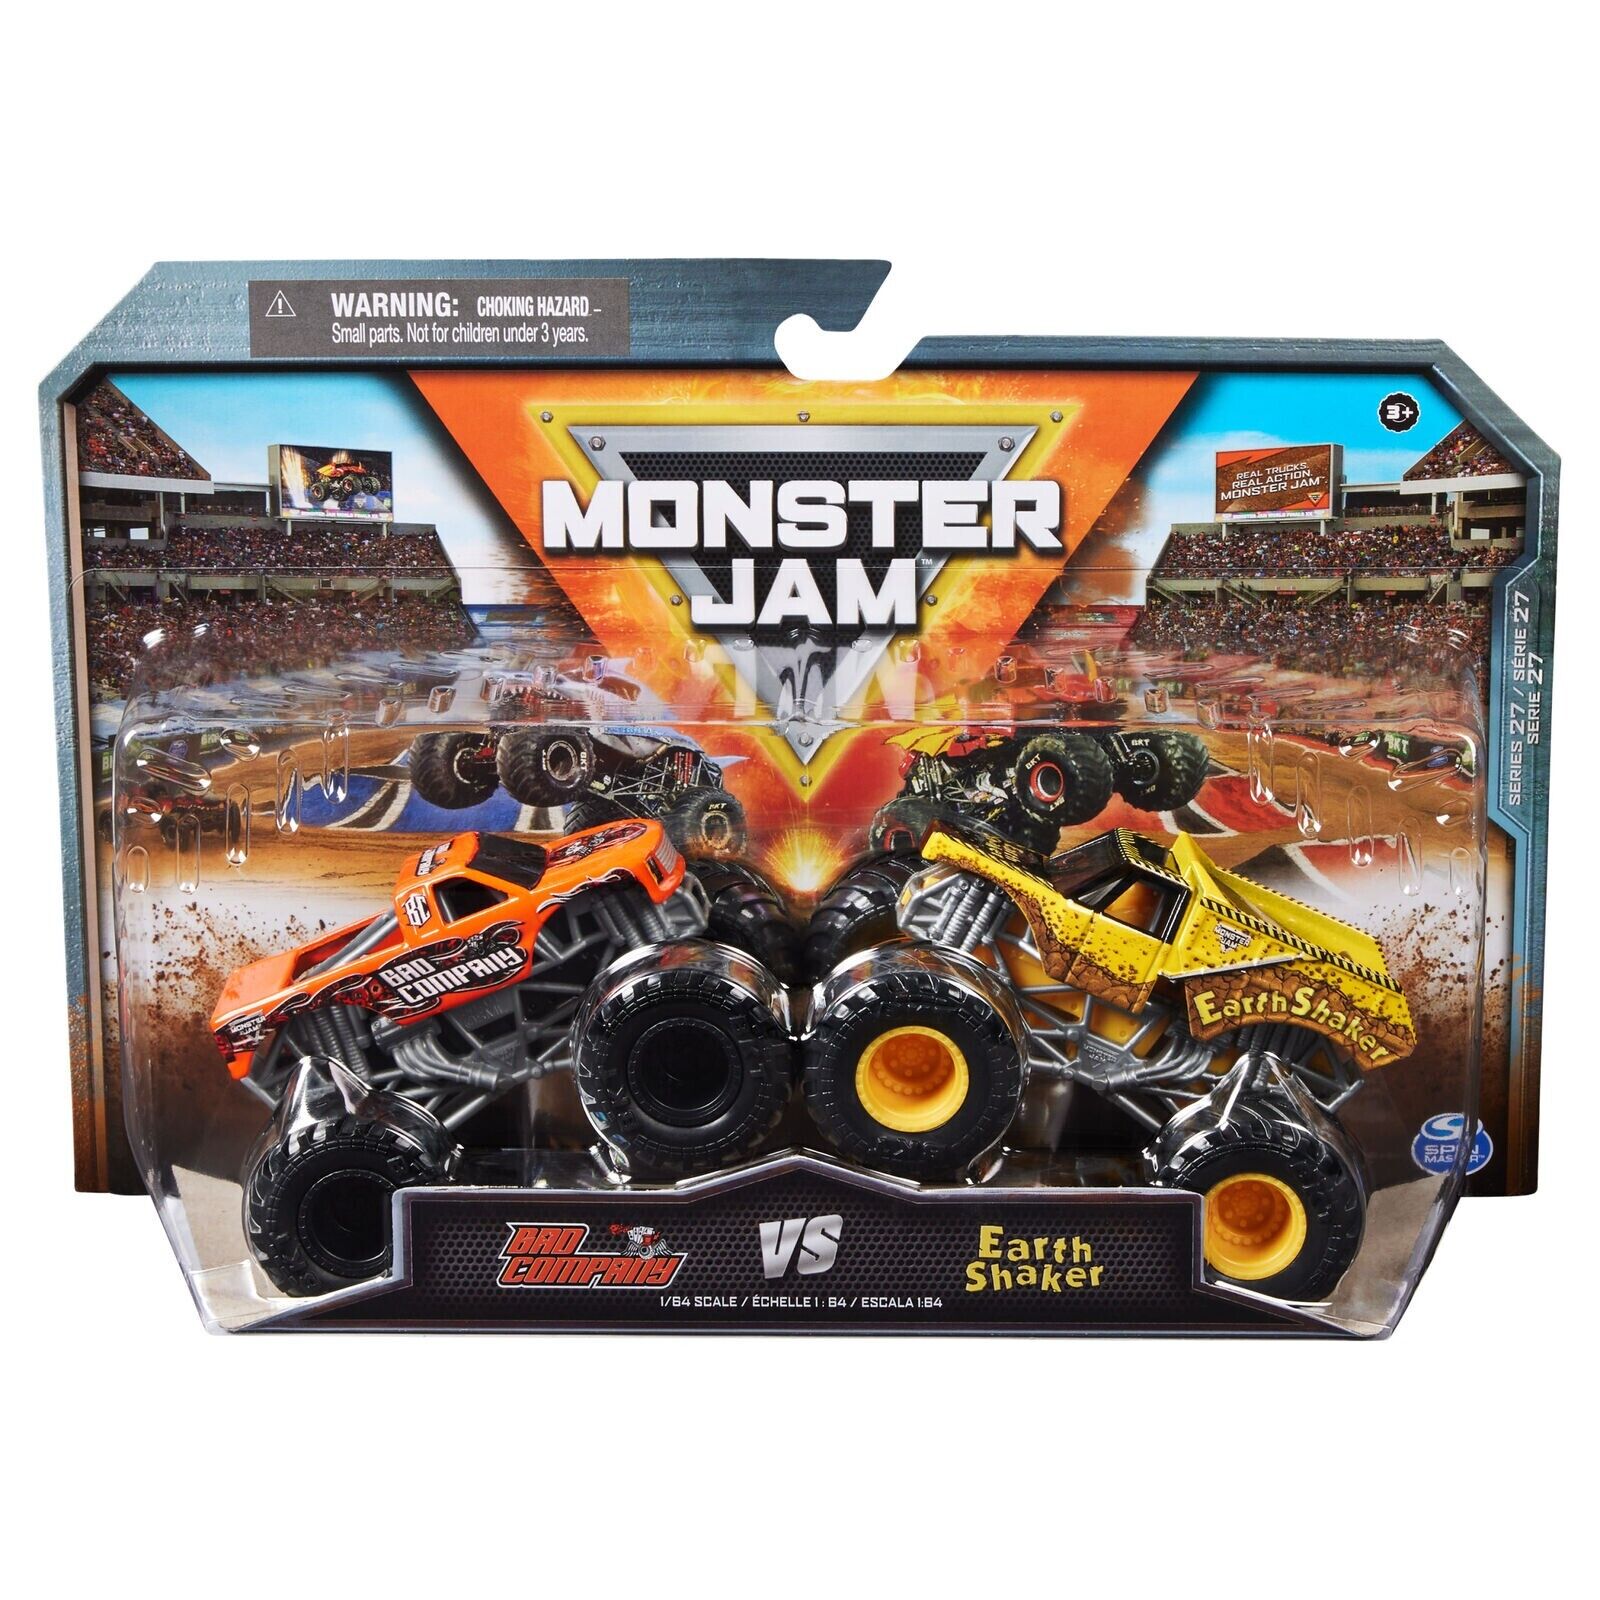 Monster Jam Series 27 Bad Company Vs Earth Shaker Die-Cast Vehicle 1:64 Scale